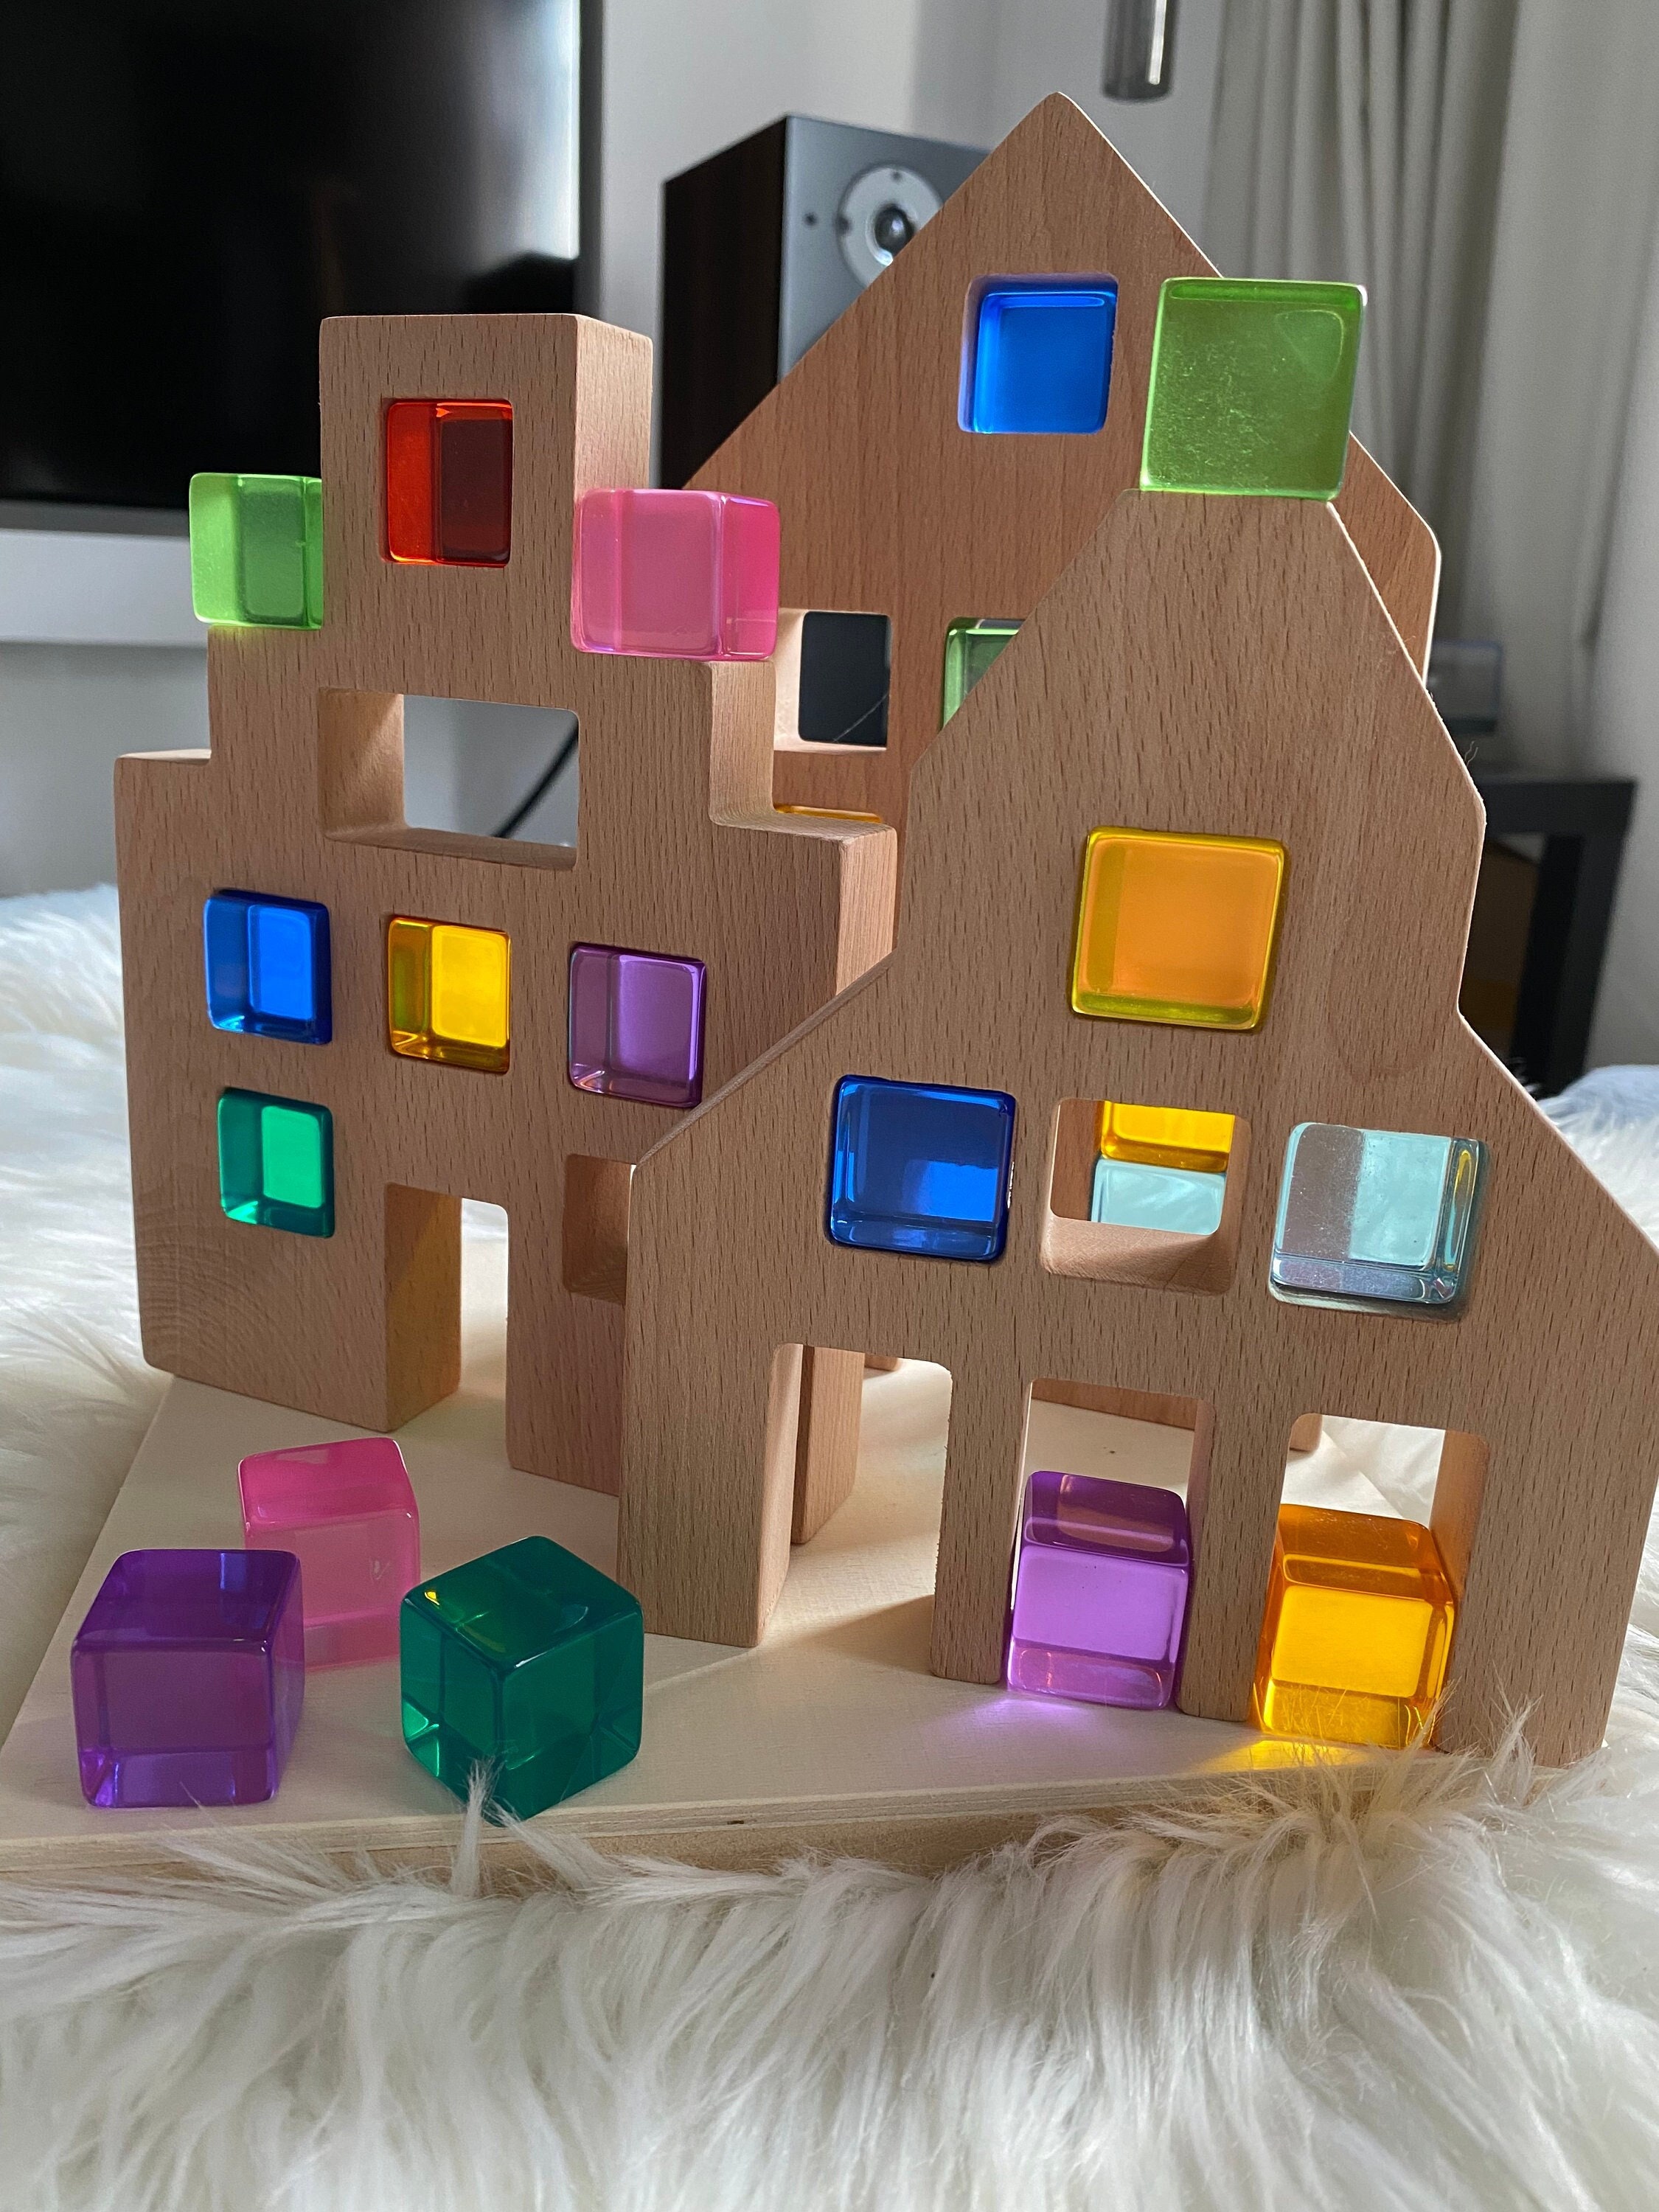 10pcs Magnetic Building Blocks Games Minecraft Toy Diy Kit Toys & Hobby For  Children Educational Magnetic Cube Building Blocks